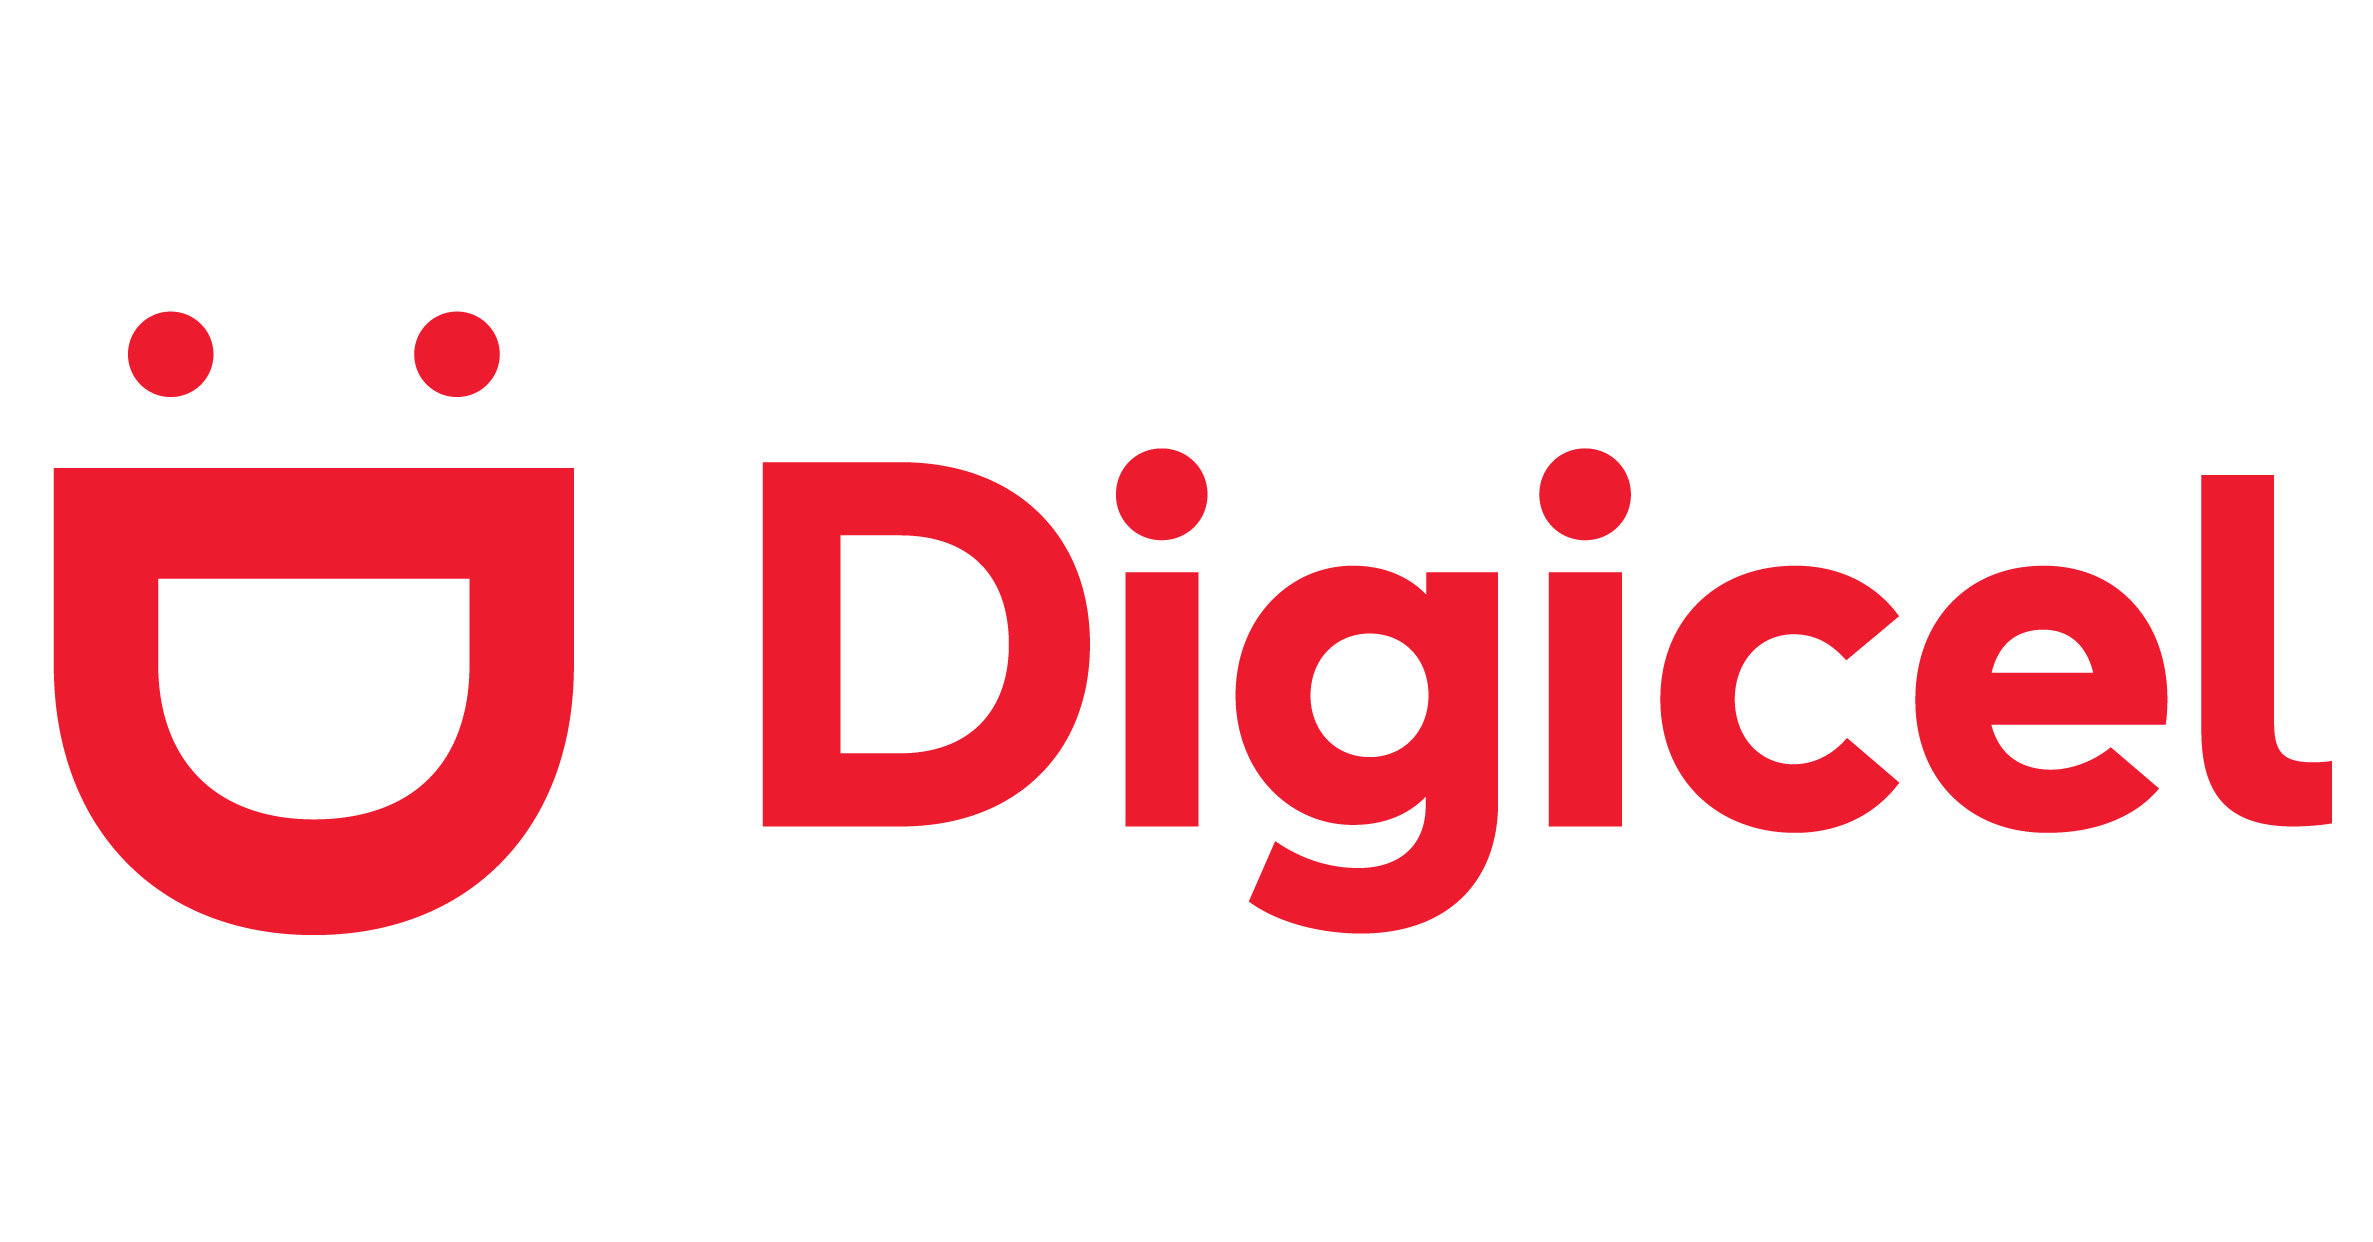 Digicel_Logo